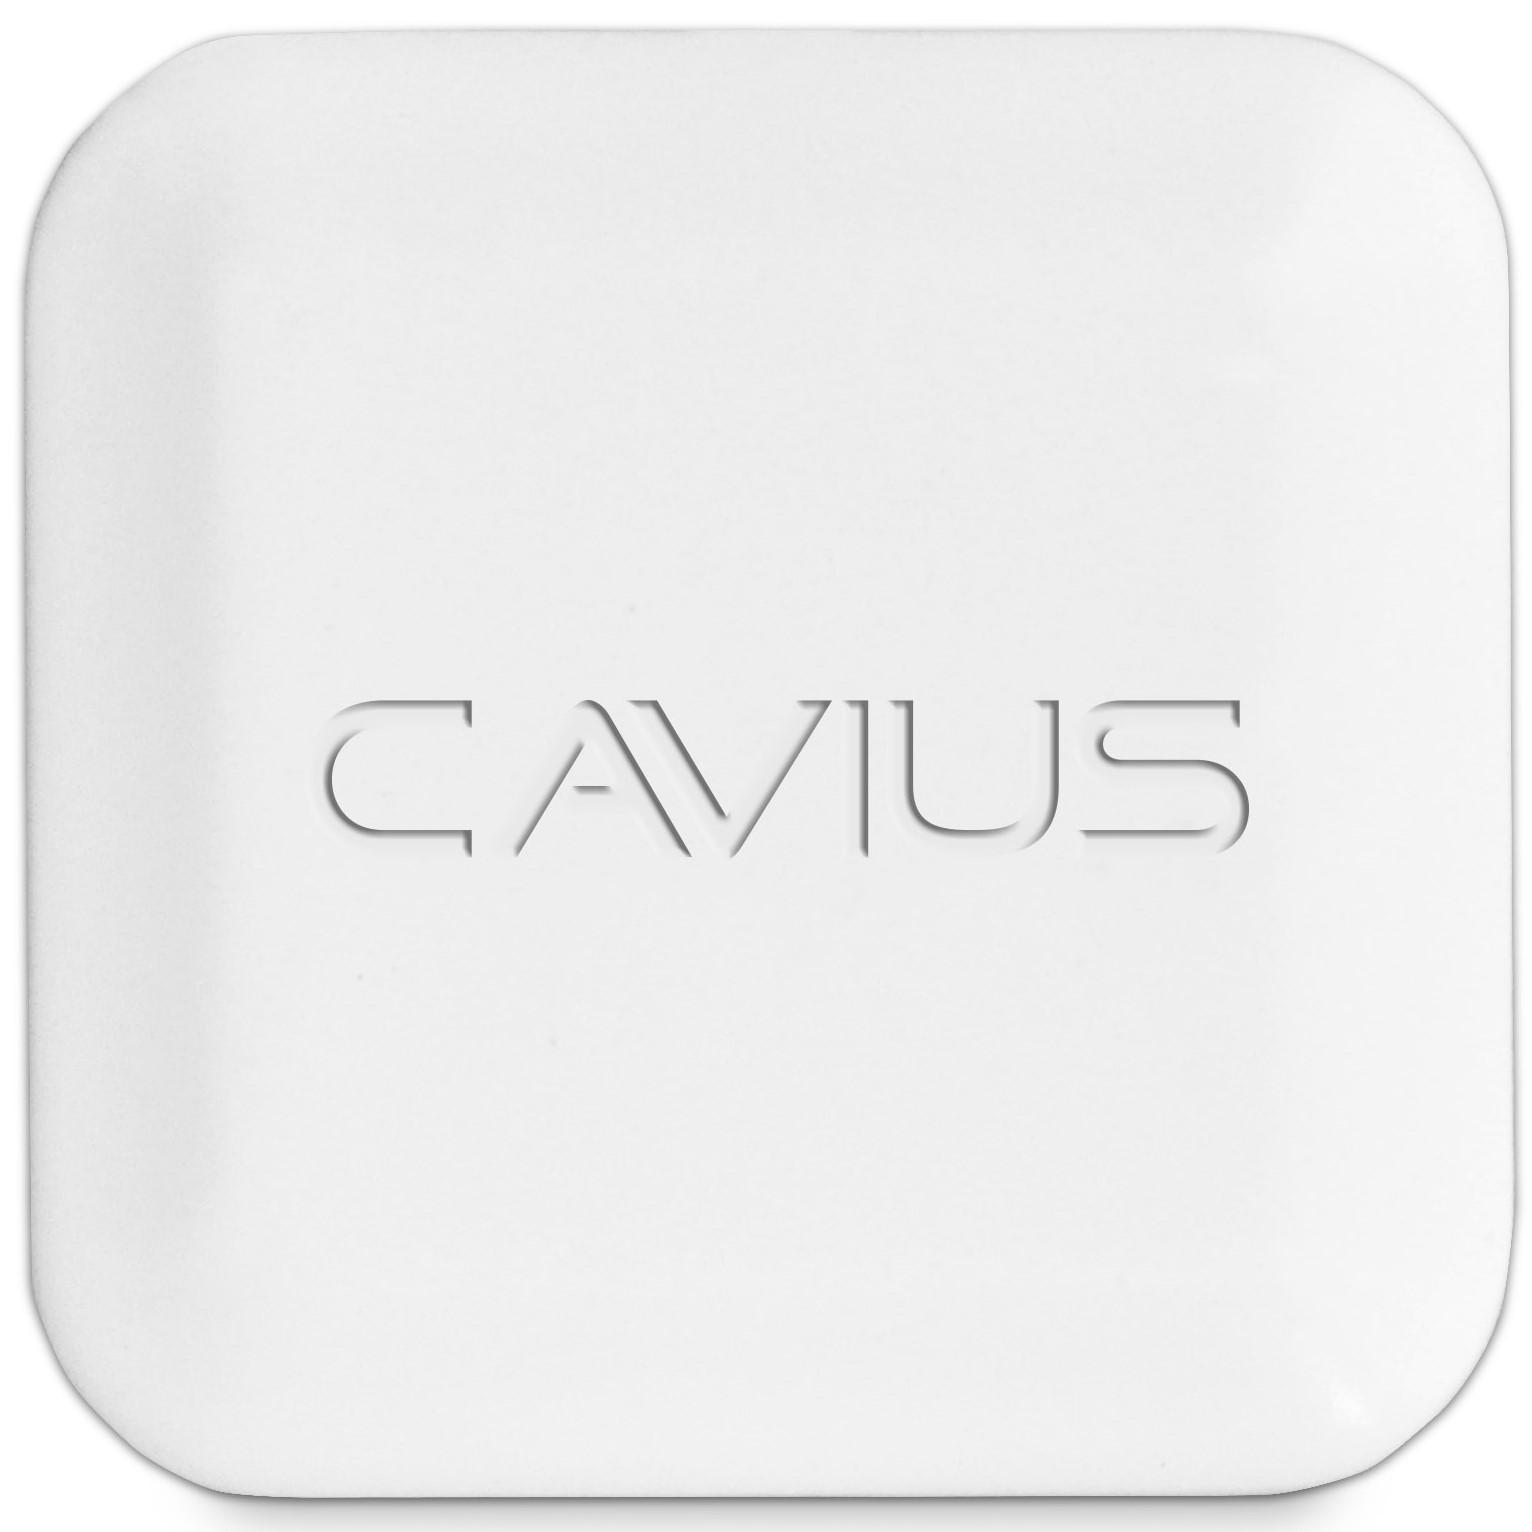 Smart Home Hub - Cavius